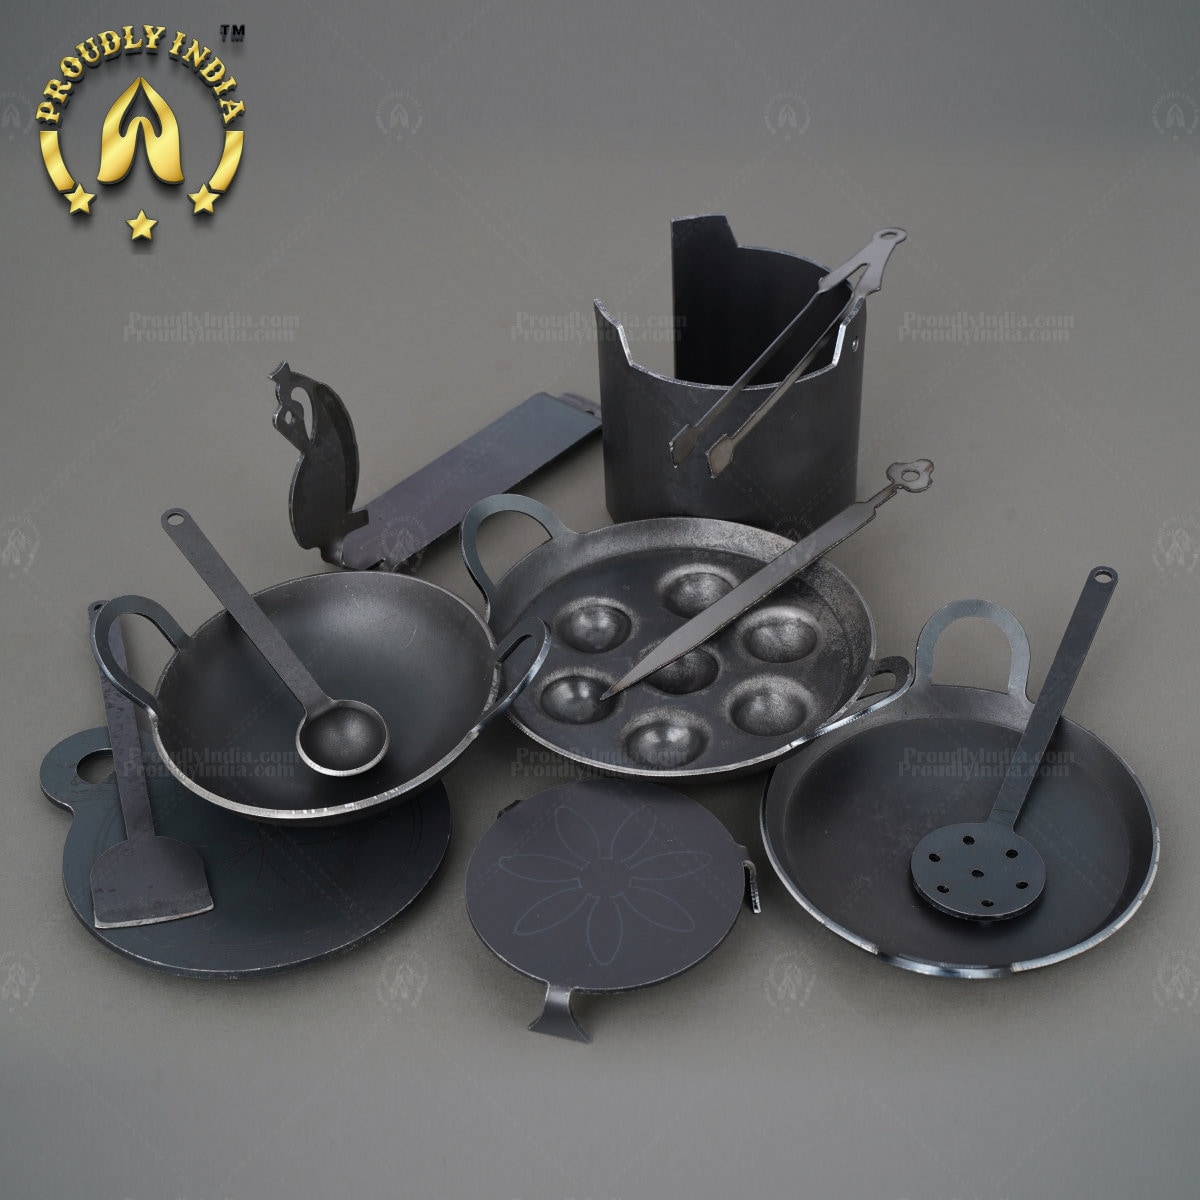 Cabilock Mini Kitchen Accessories 1 Set Wok Pan with 9.5X9.5CM, Black,Khaki